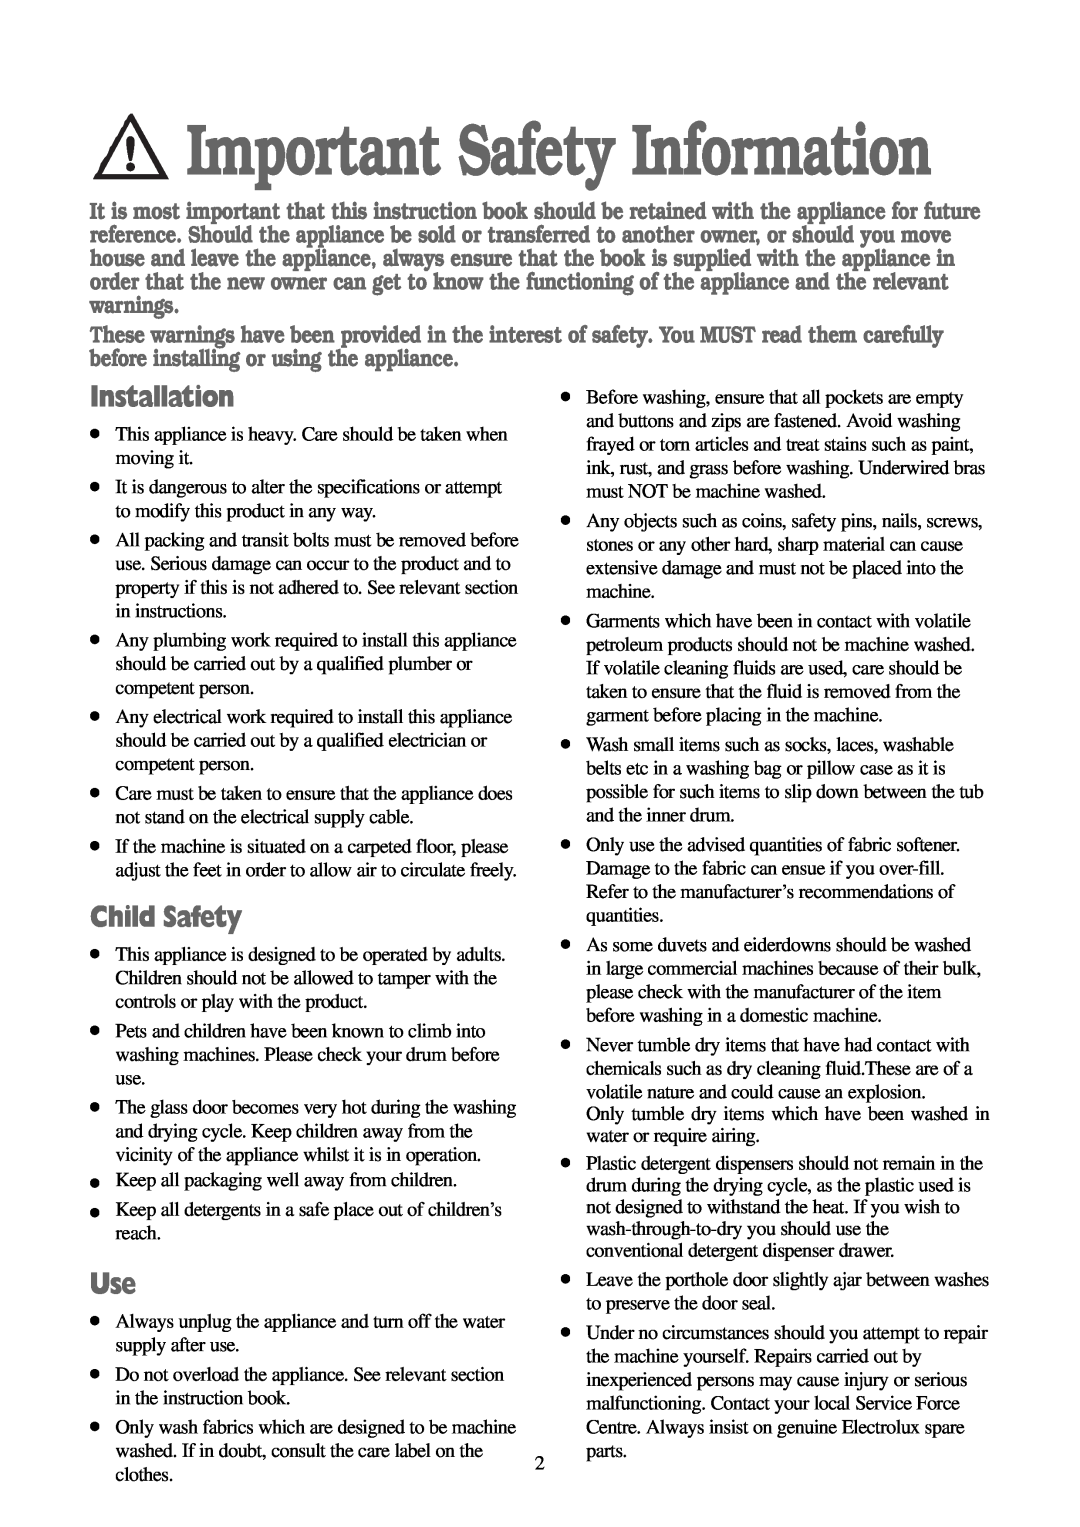 Electrolux EWD 1419 I manual Installation, Child Safety, Important Safety Information 